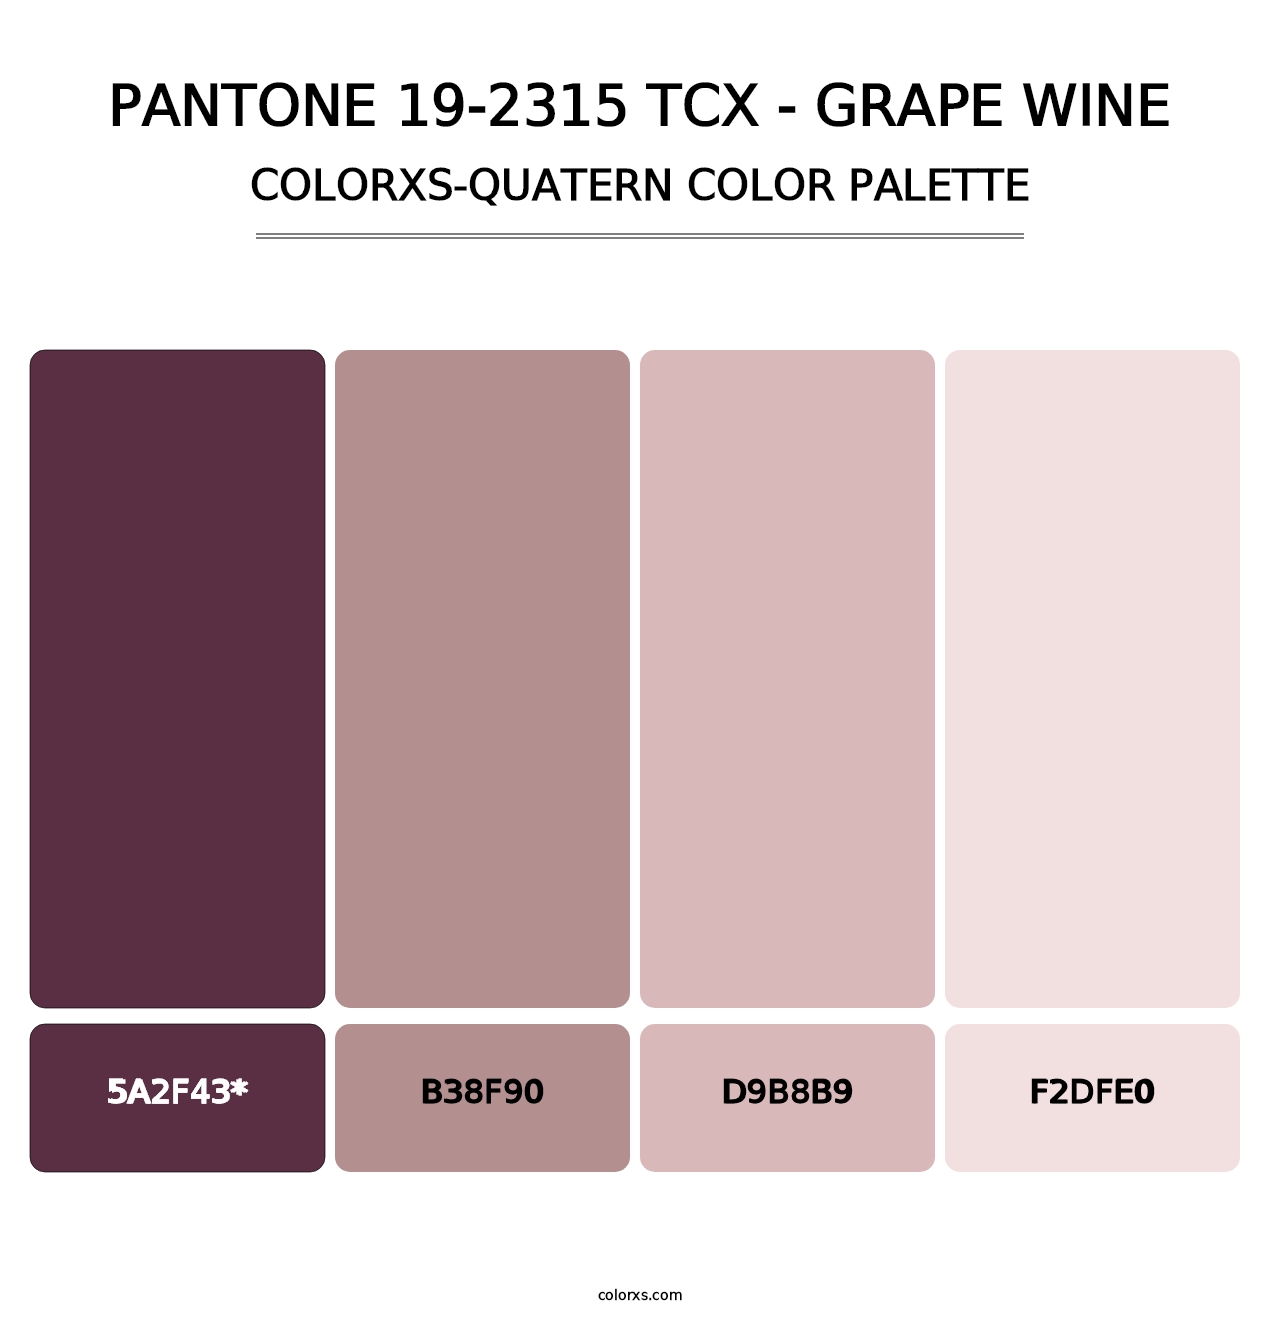 PANTONE 19-2315 TCX - Grape Wine - Colorxs Quatern Palette